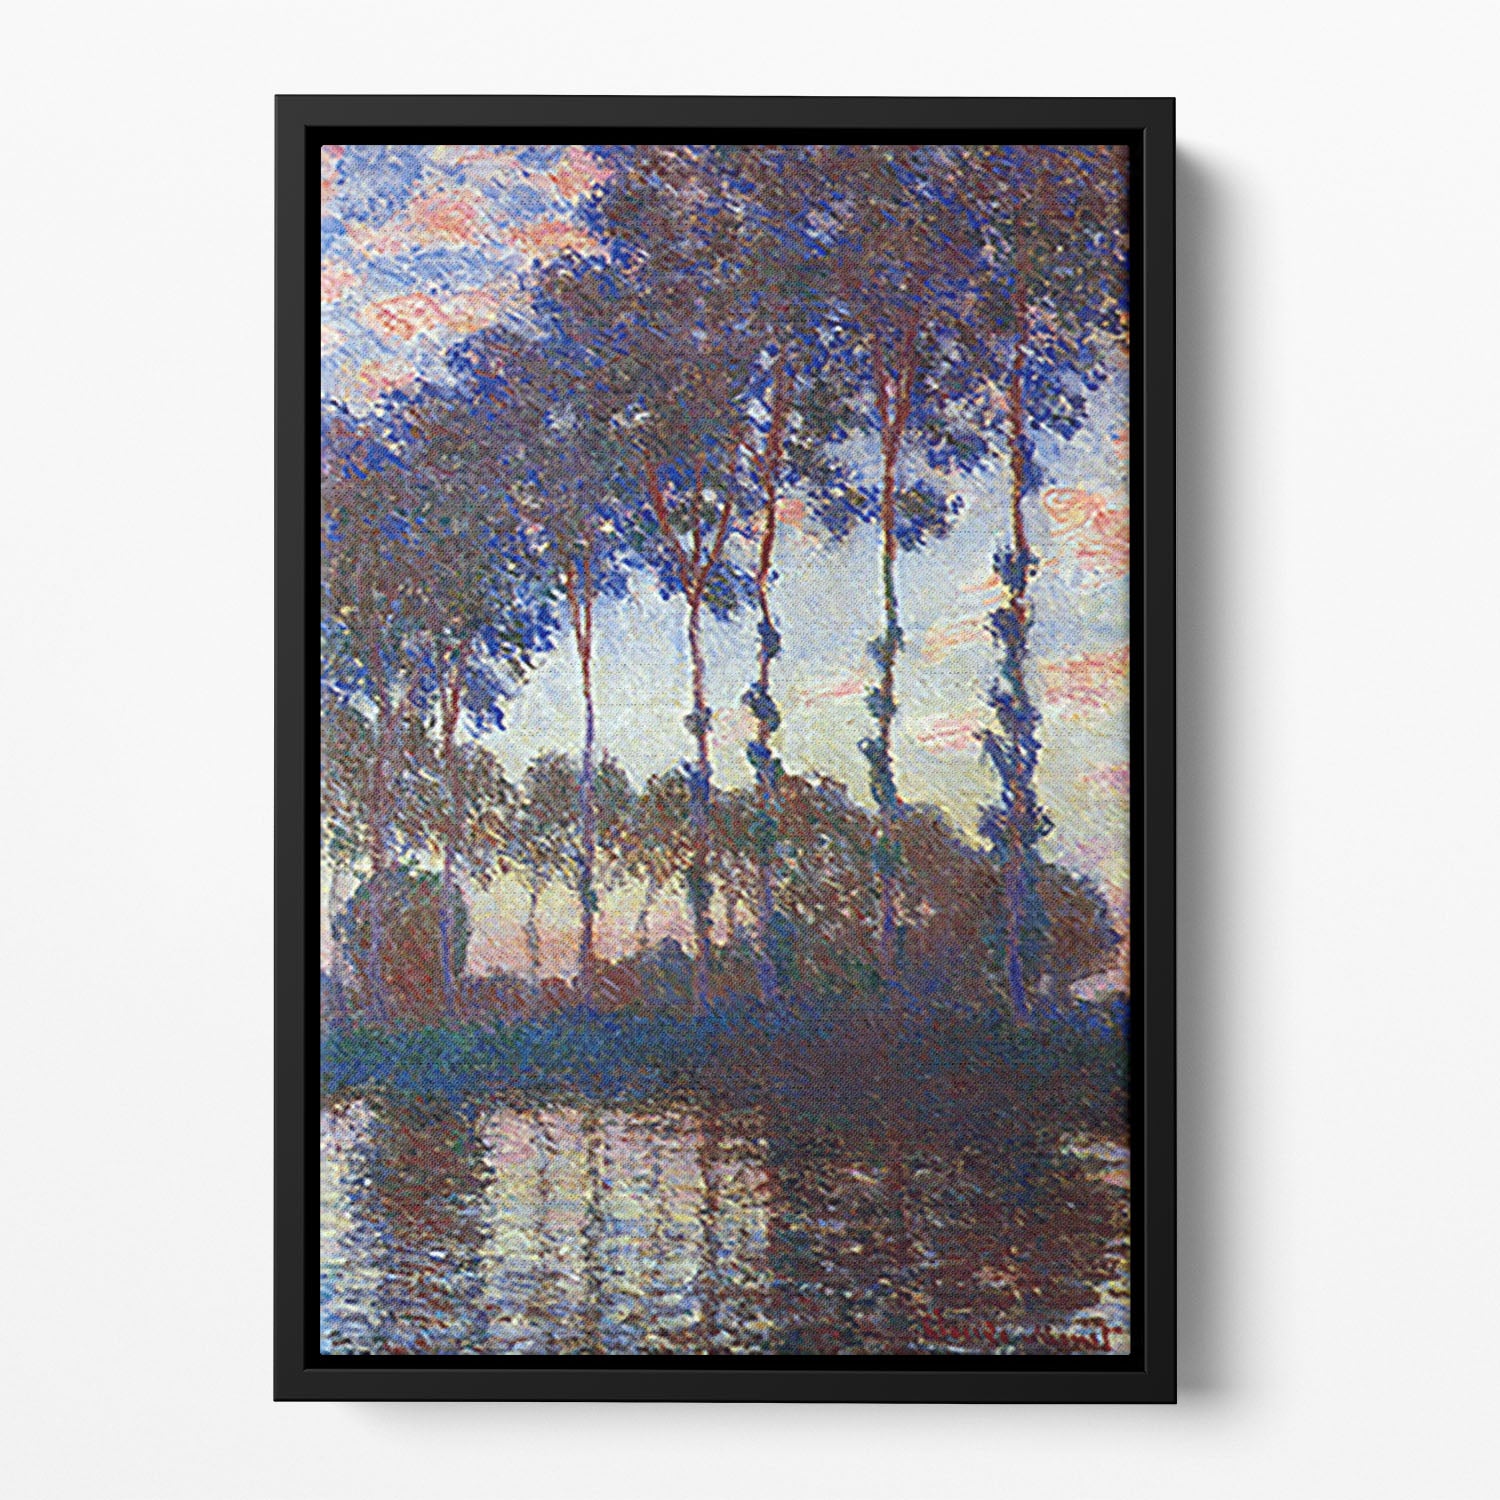 Poplars sunset by Monet Floating Framed Canvas